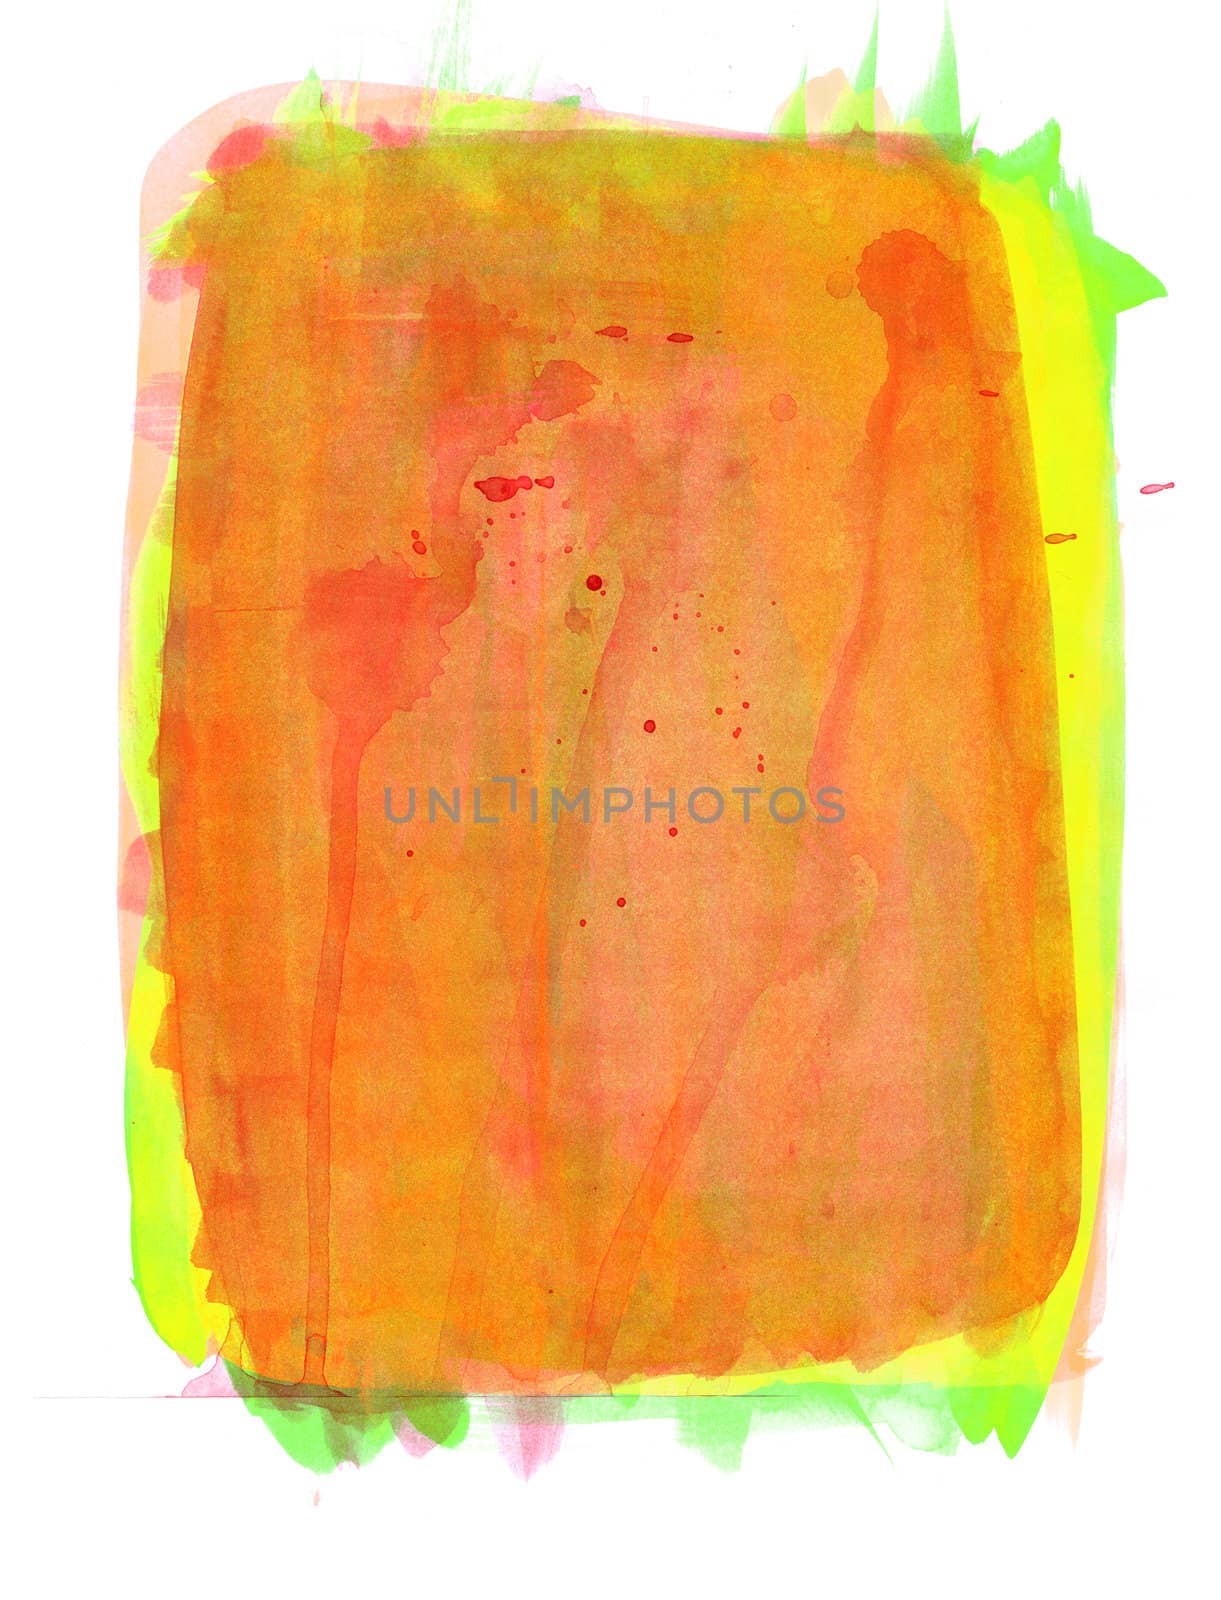 Orange water color frame background texture